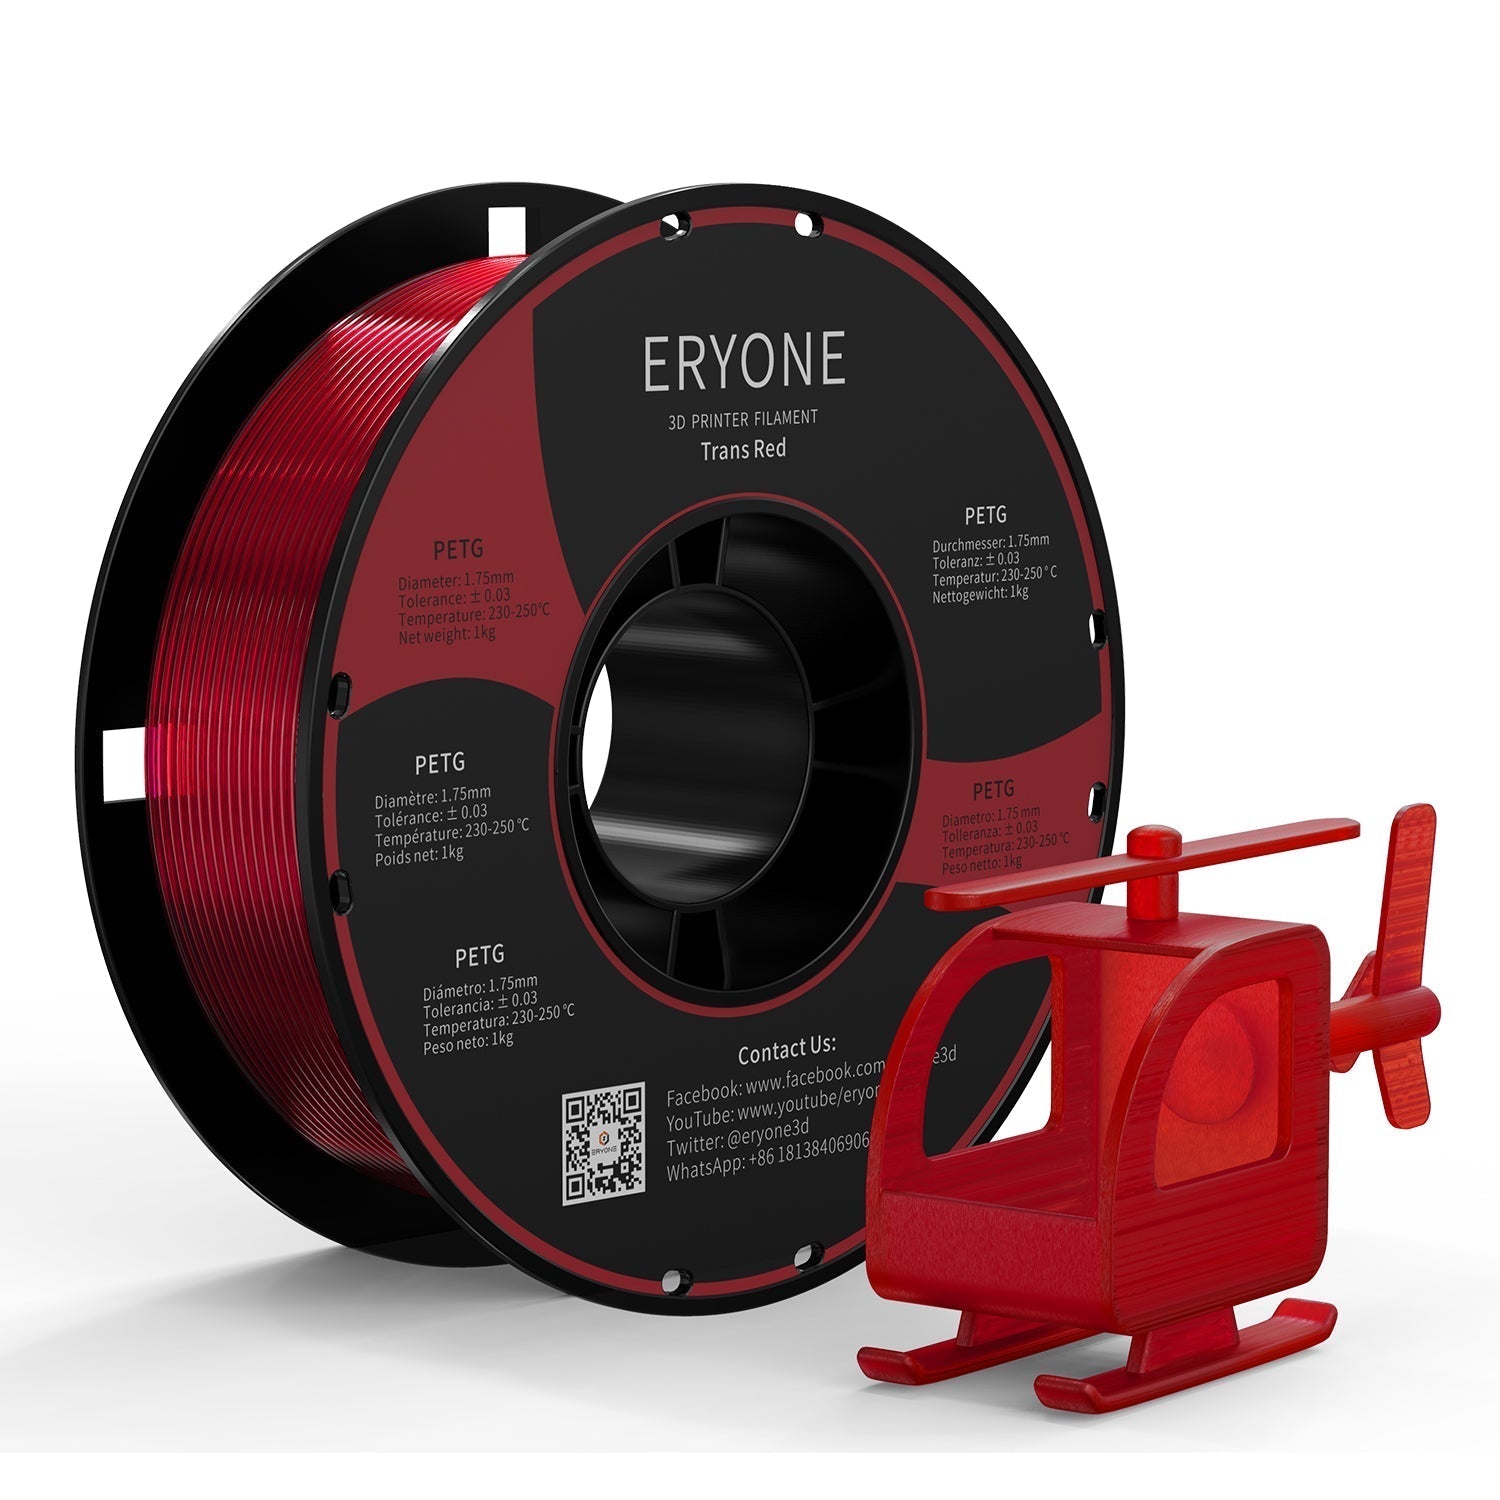 Filamento PETG ERYONE, filamento da 1,75 mm ±0,03 mm per stampante 3D, 1 kg (2,2 libbre) / bobina